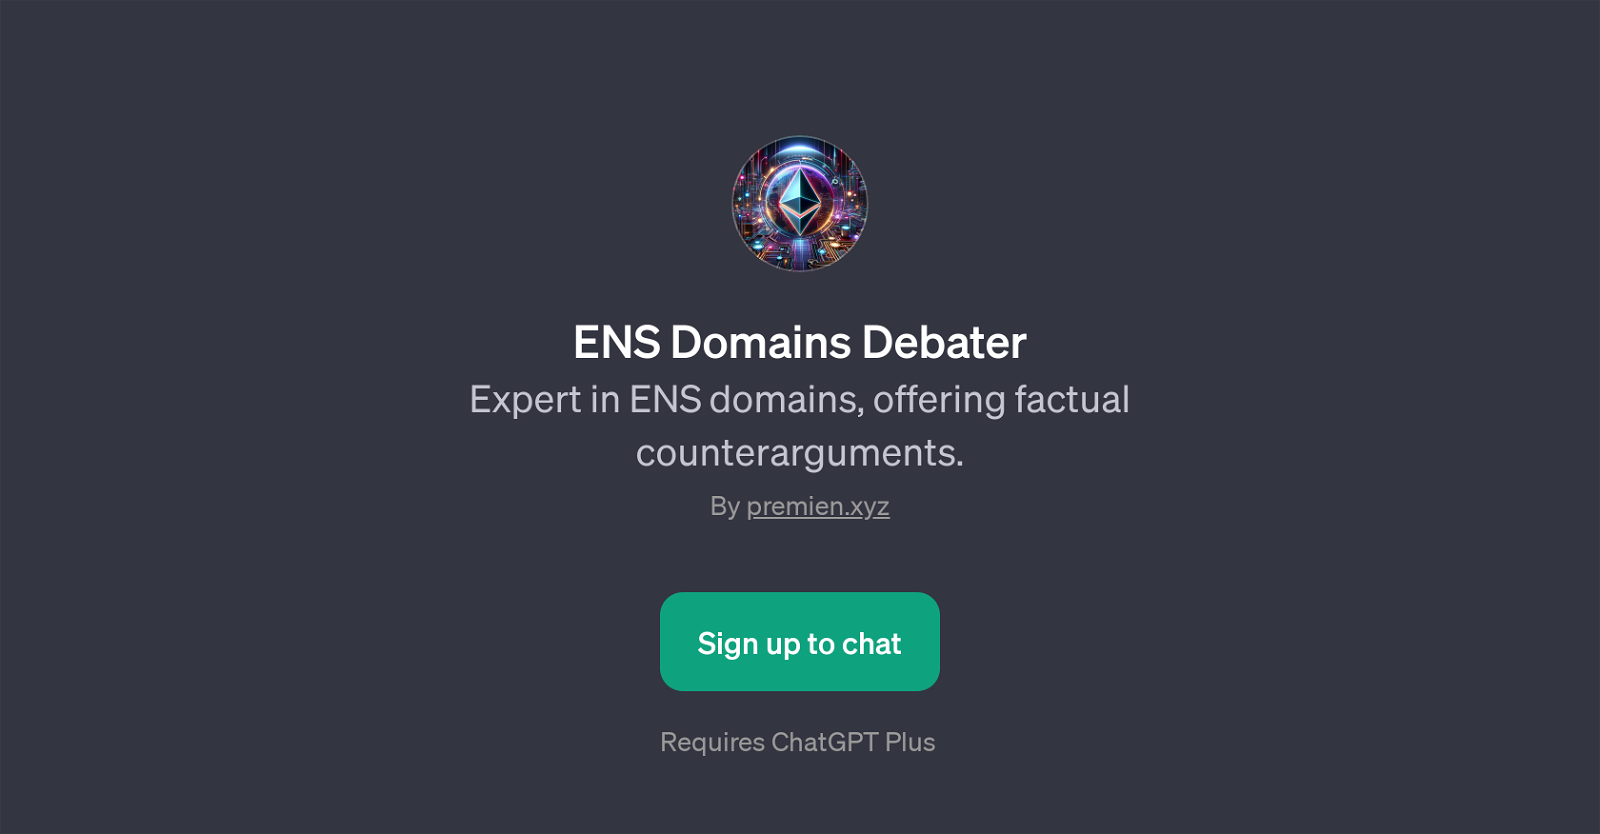 ENS Domains Debater website